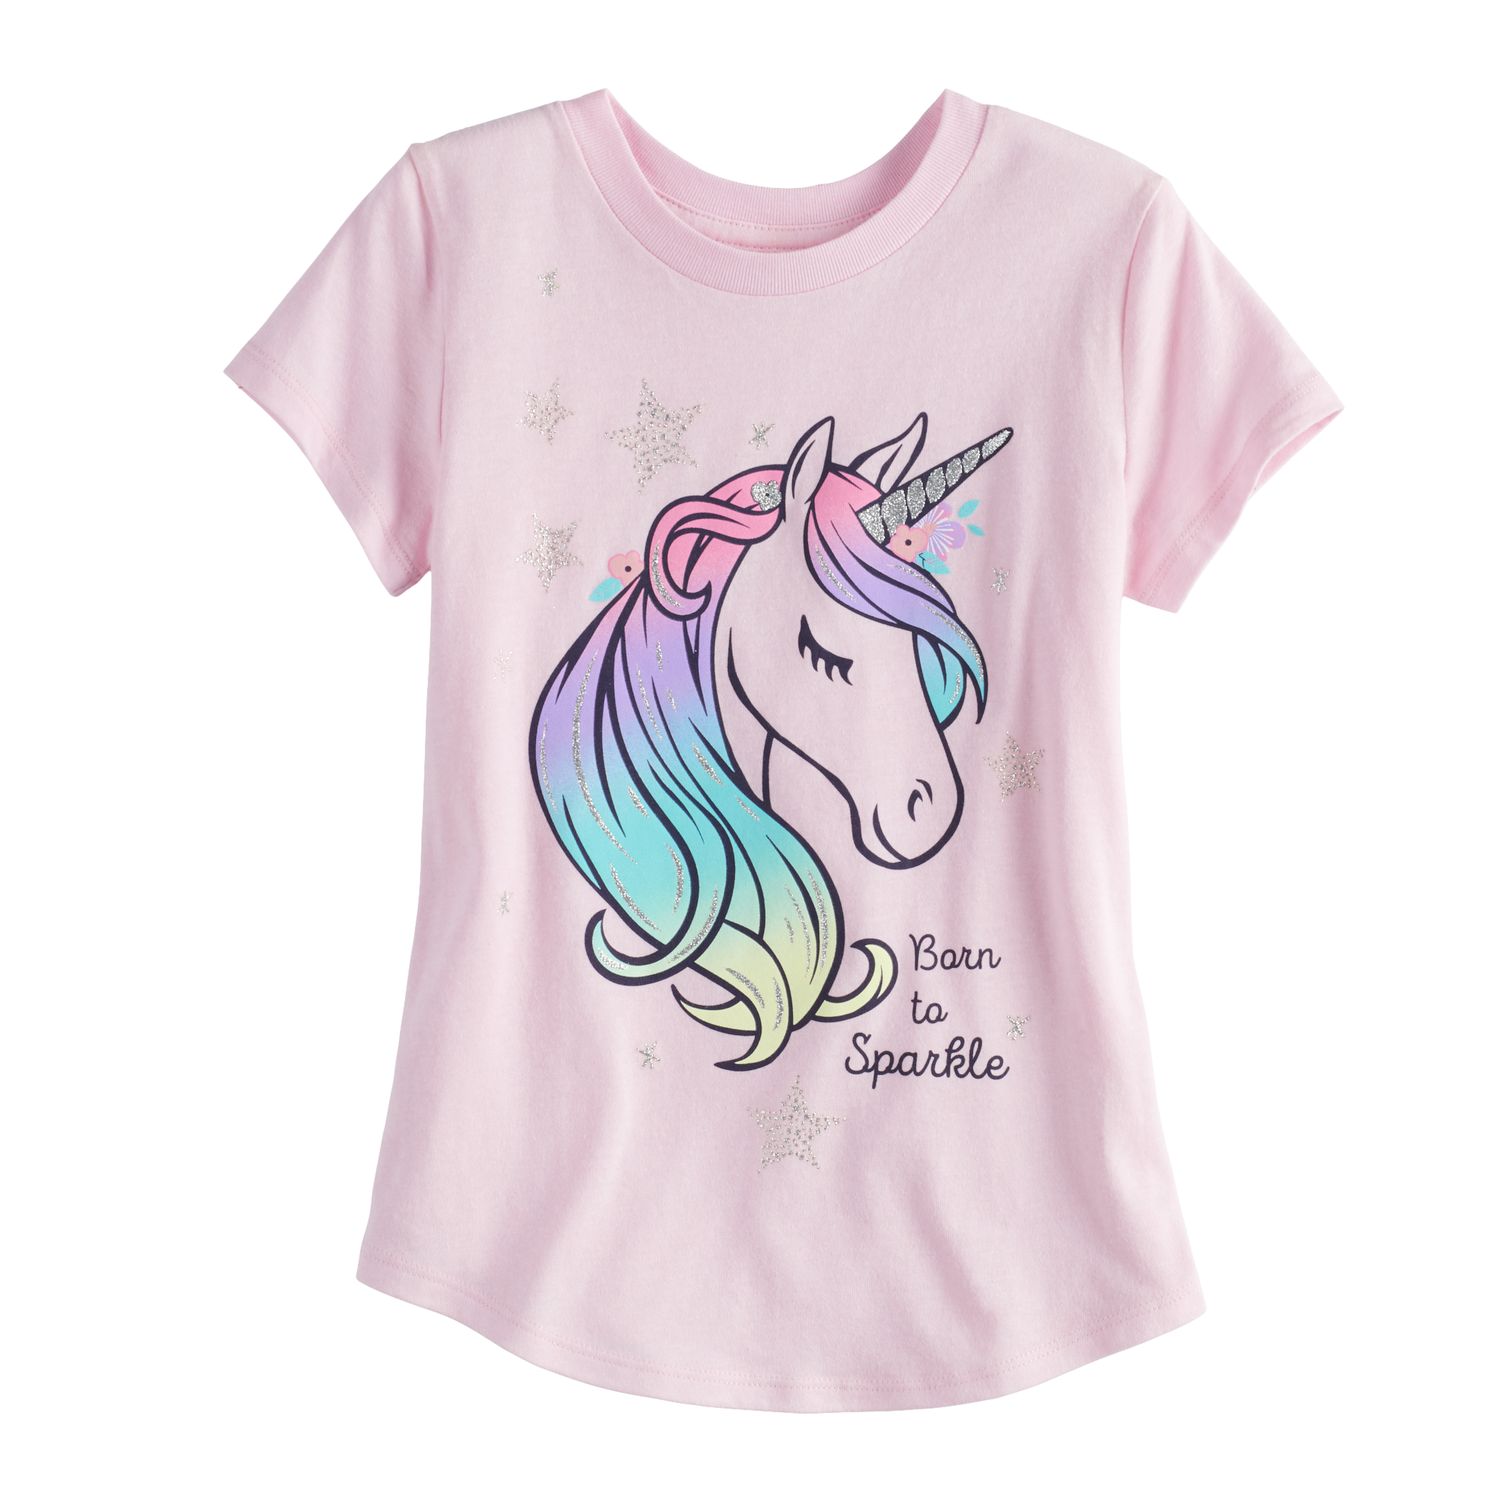 unicorn shirt kohls